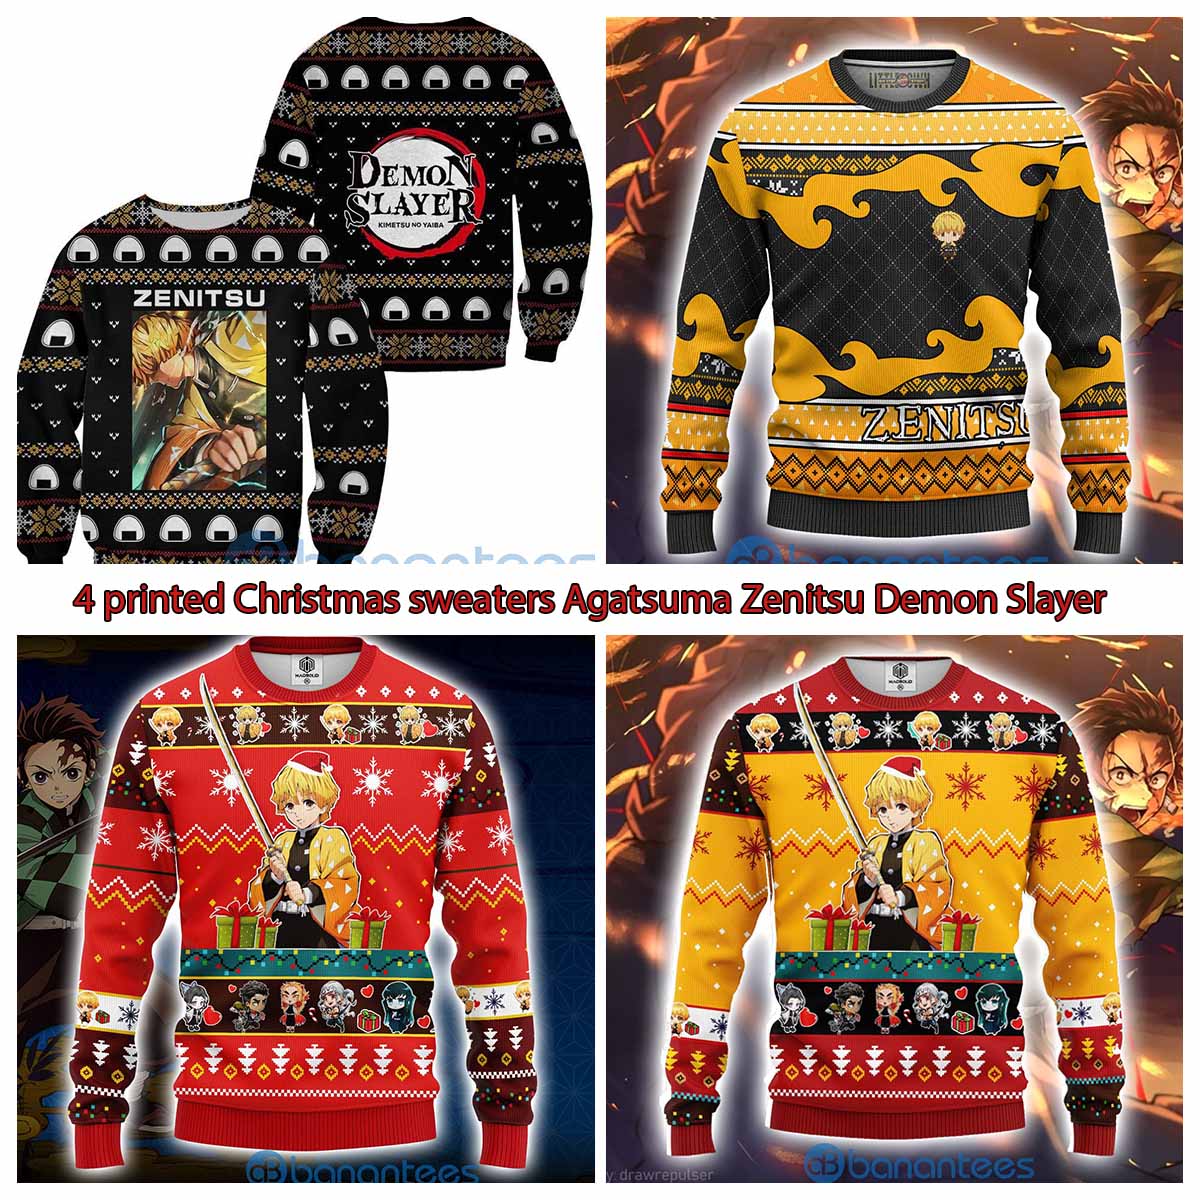 4 printed Christmas sweaters Agatsuma Zenitsu Demon Slayer